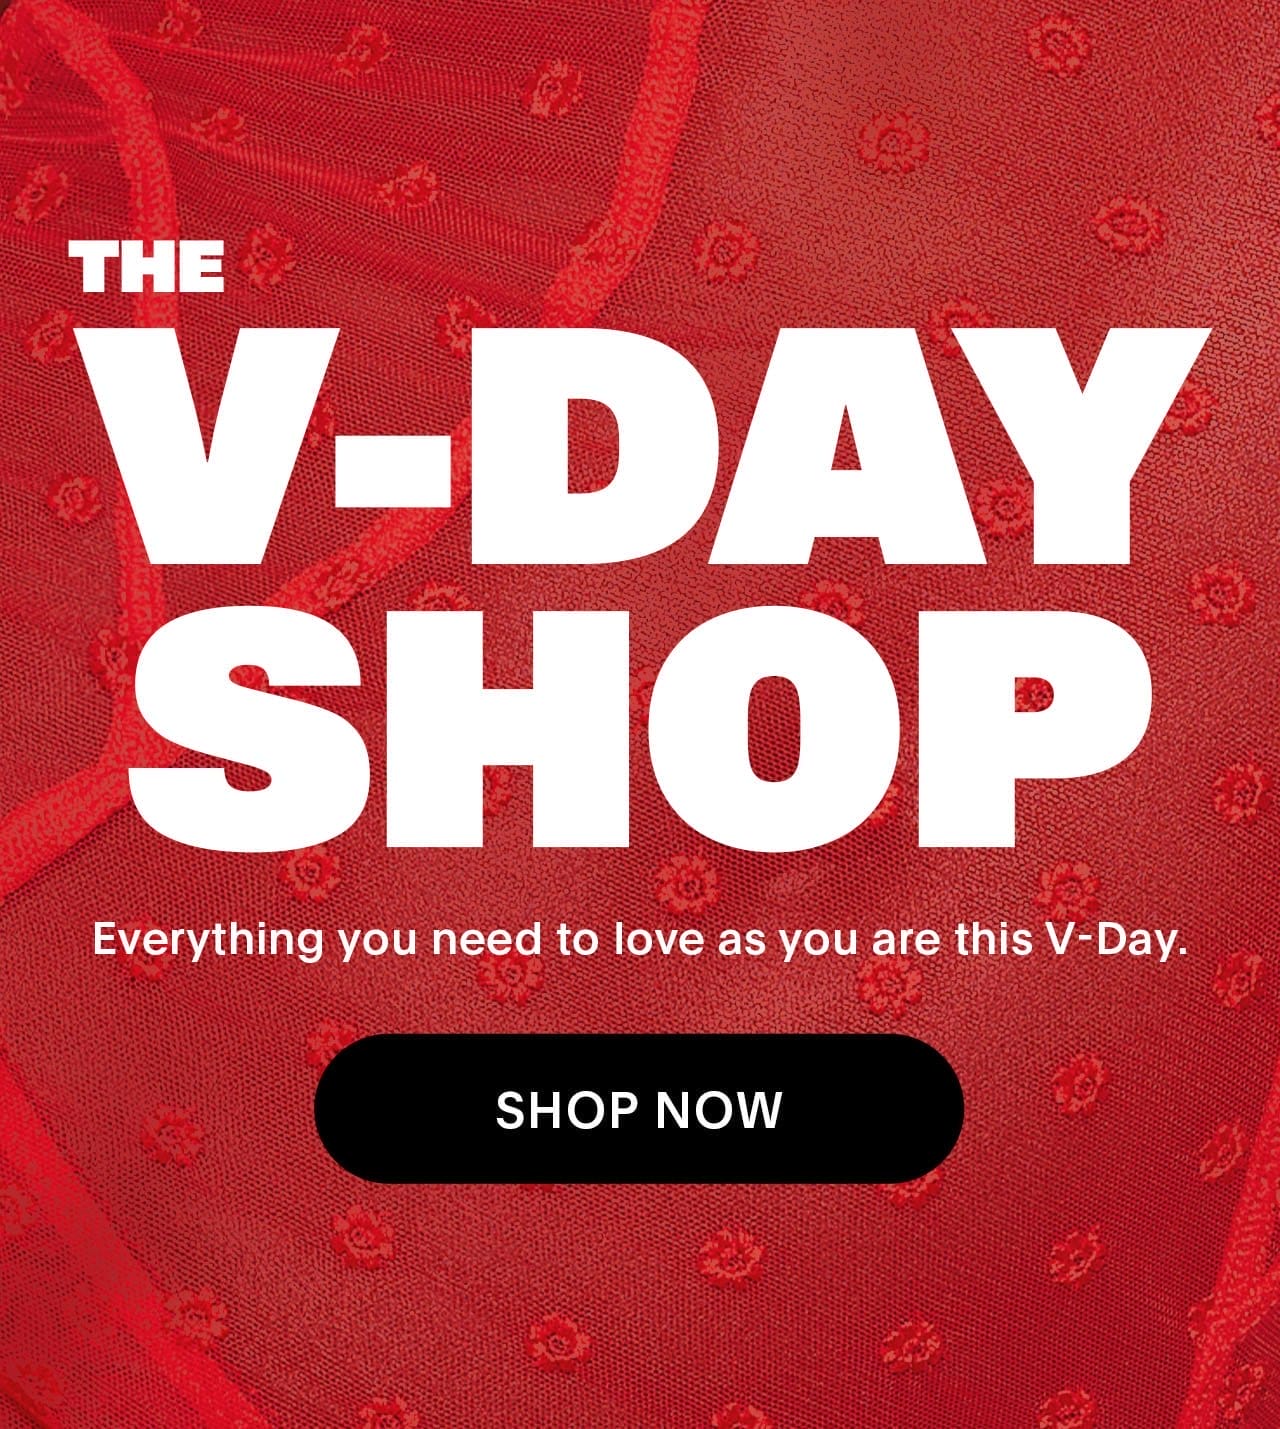 THE V-DAY SHOP